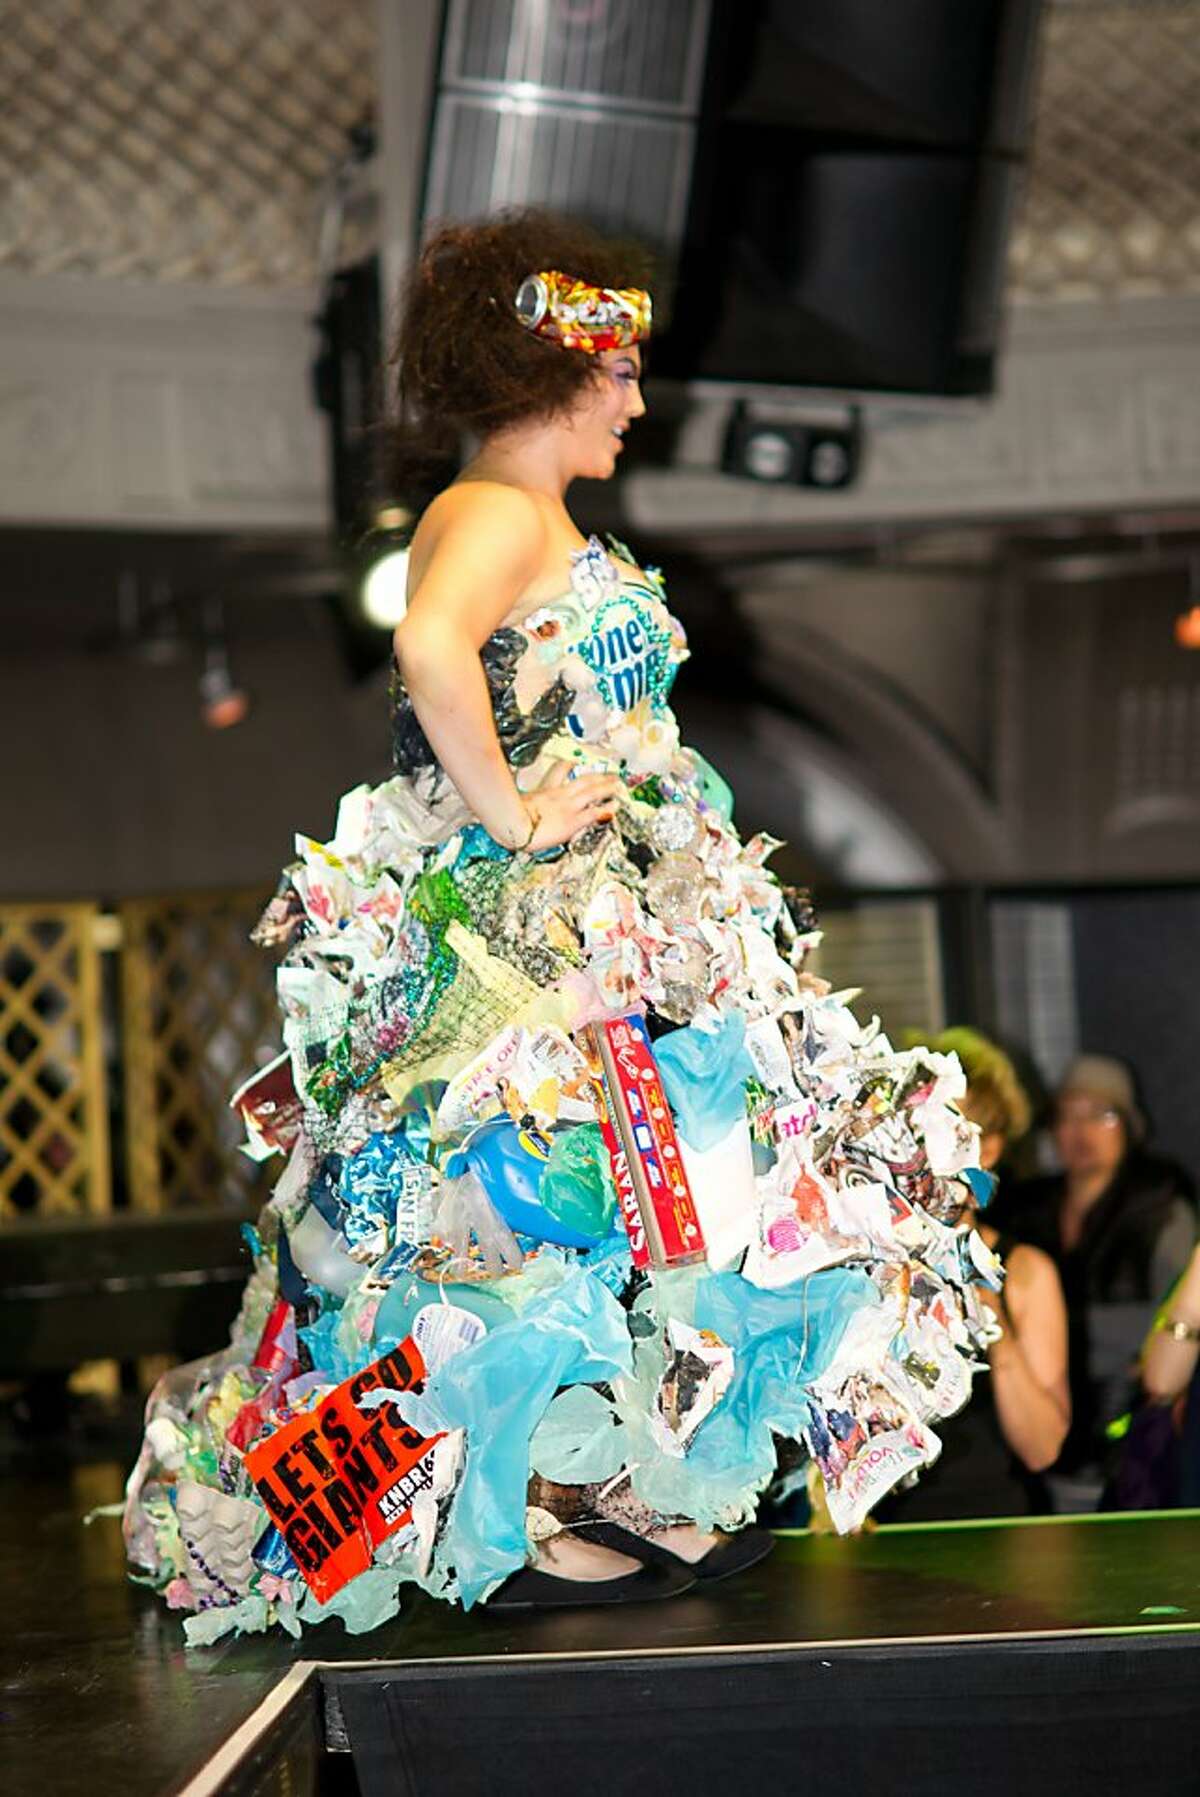 'The Trashion Show' recycles fashion, raises funds